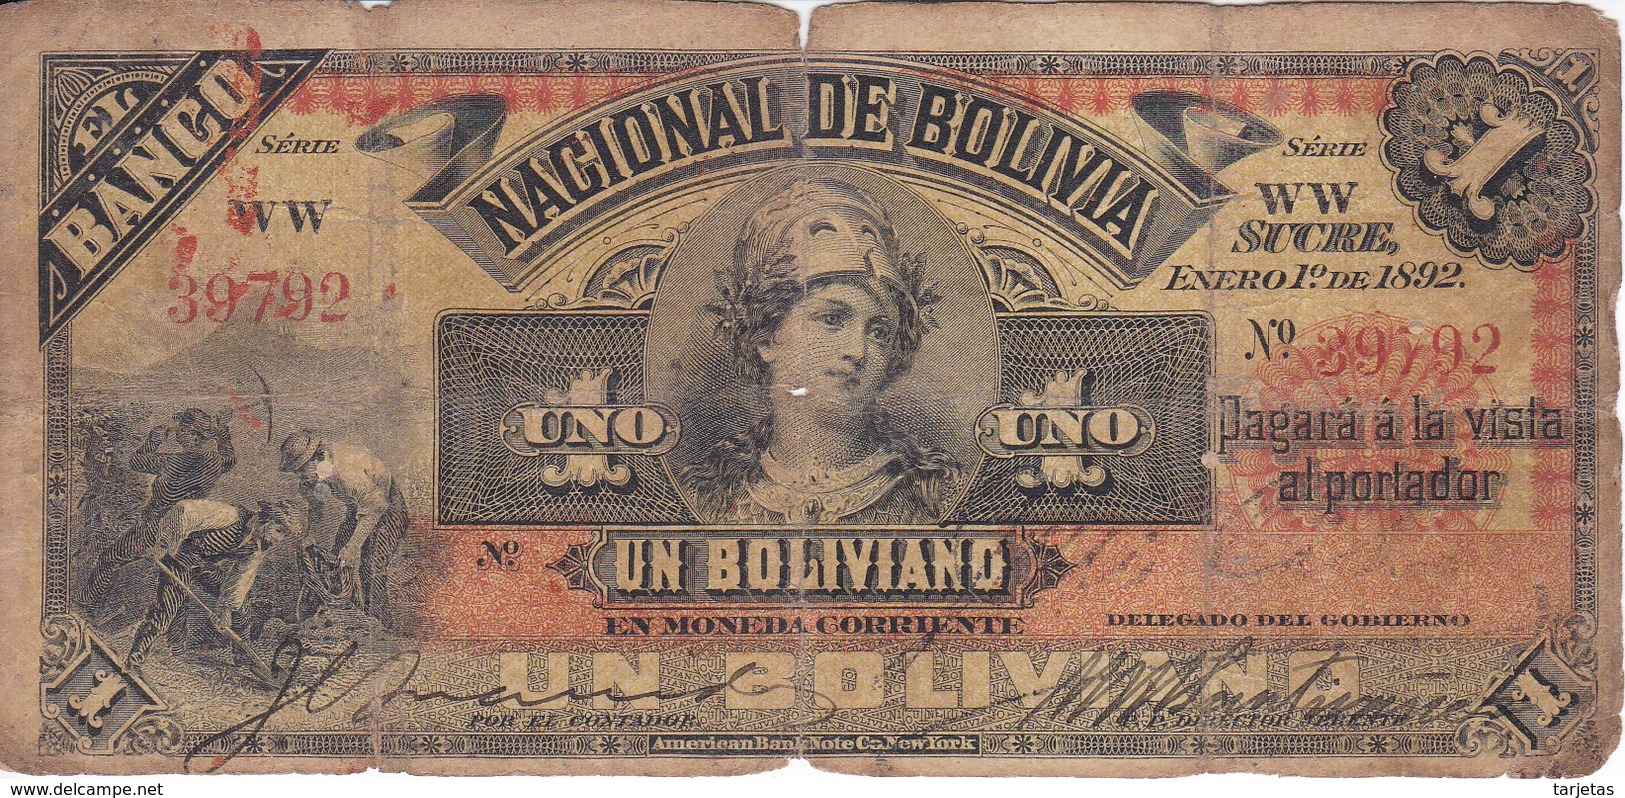 BILLETE DE BOLIVIA DE 1 BOLIVIANO DEL AÑO 1892 SERIE WW (BANKNOTE) - Bolivia